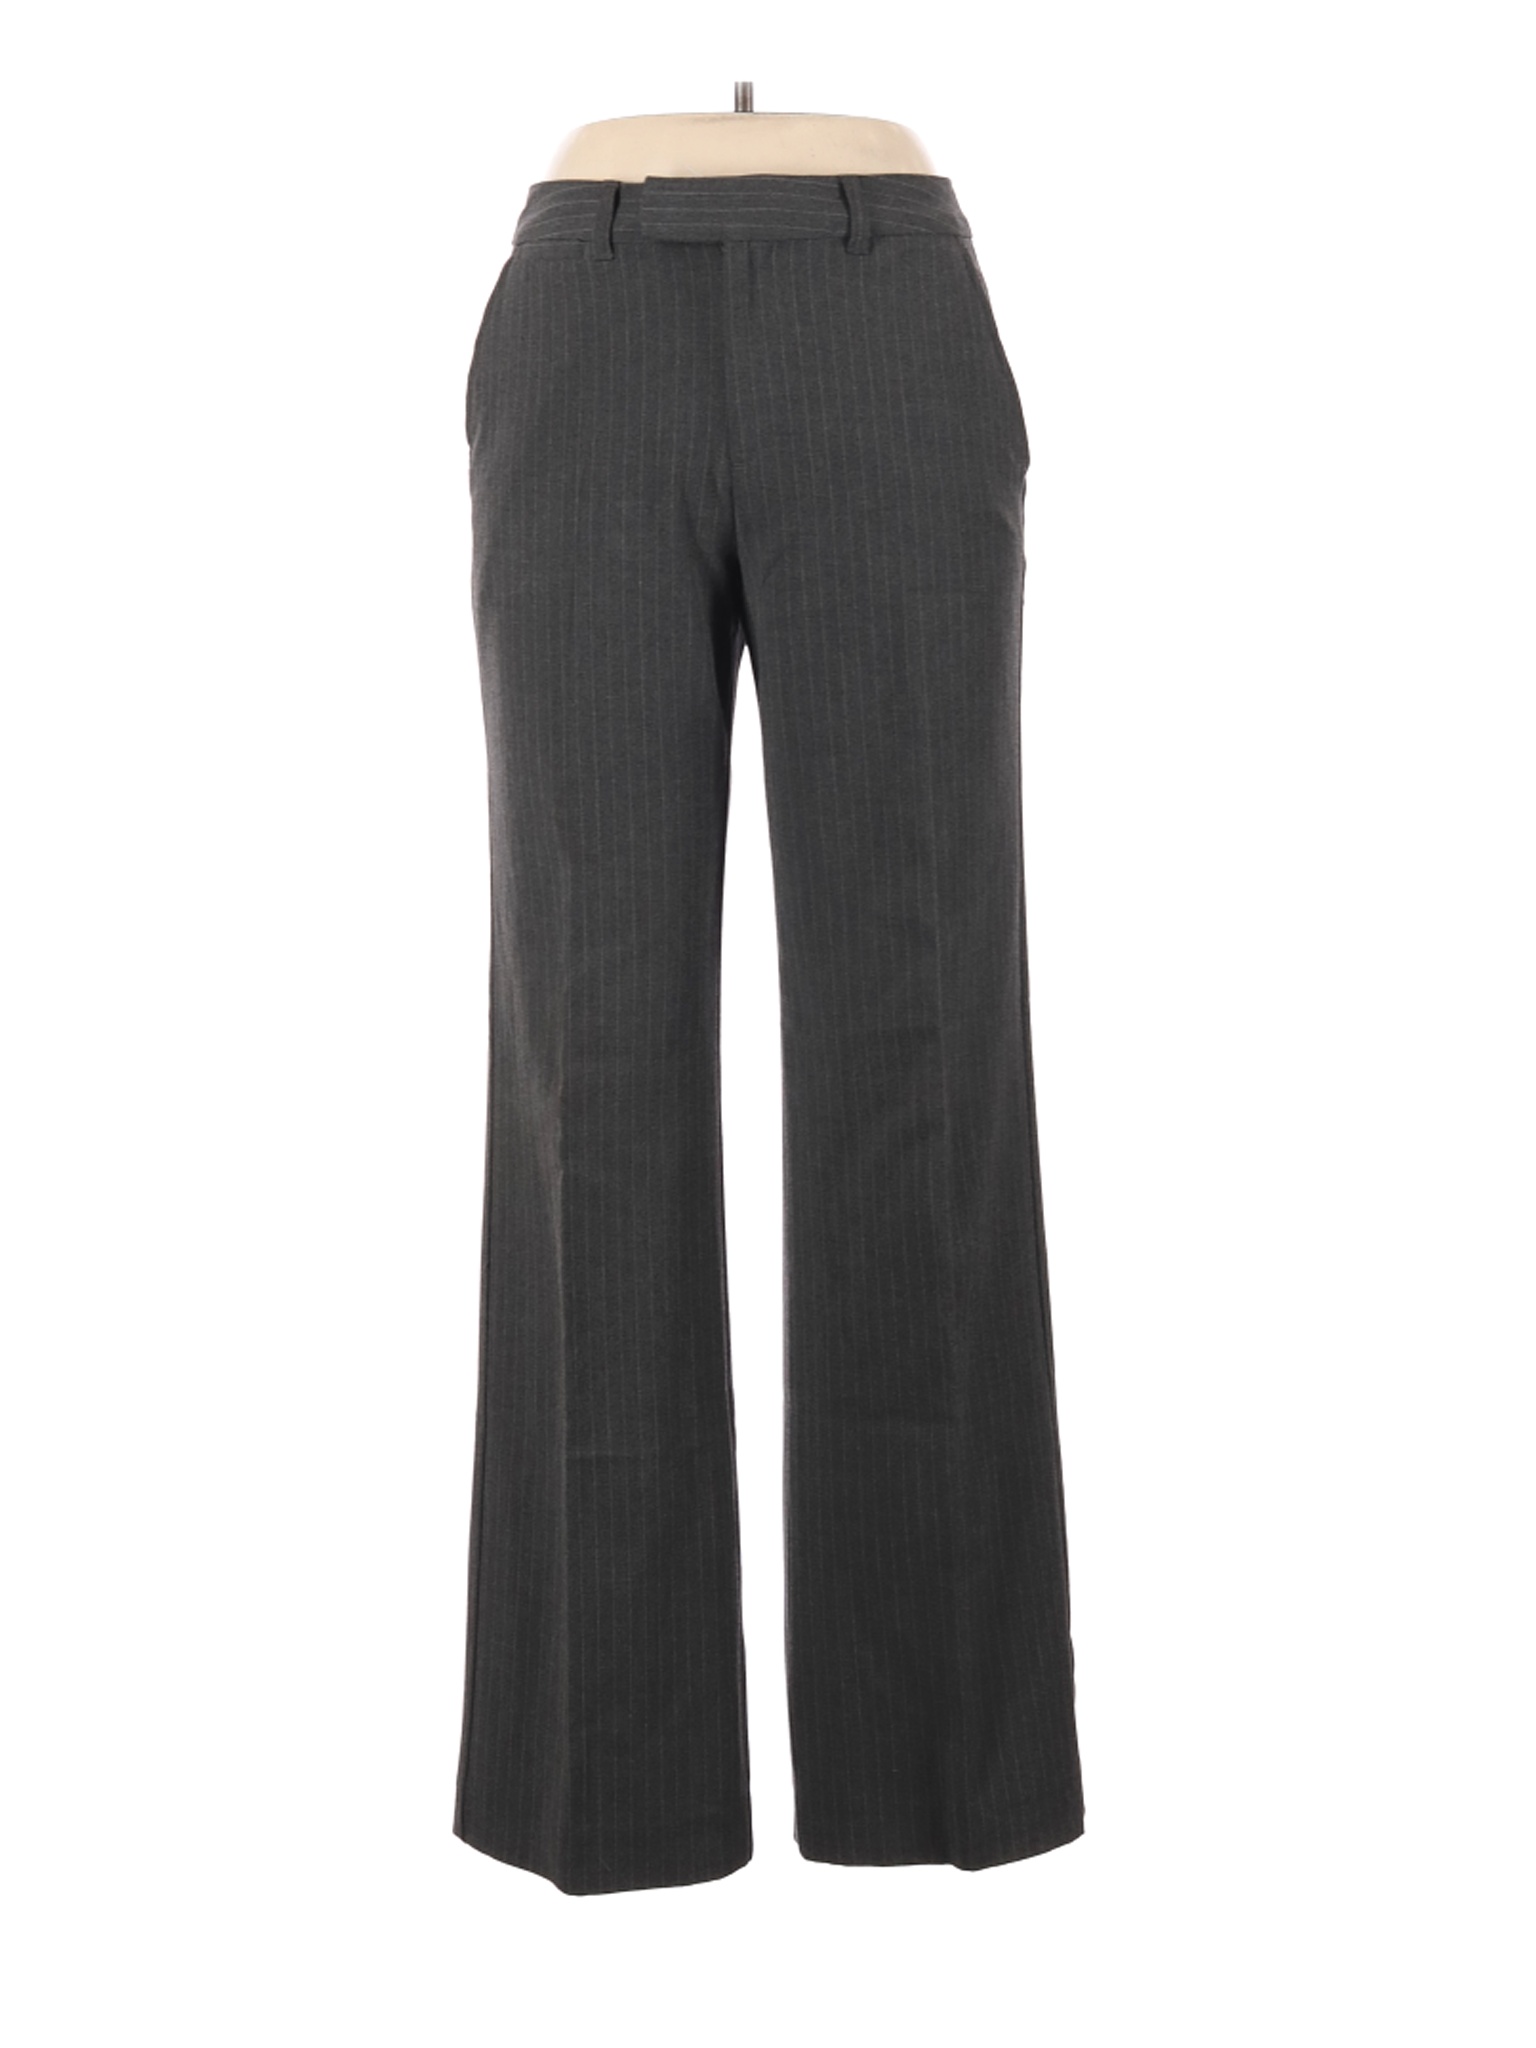 Old Navy Women Gray Dress Pants 6 | eBay